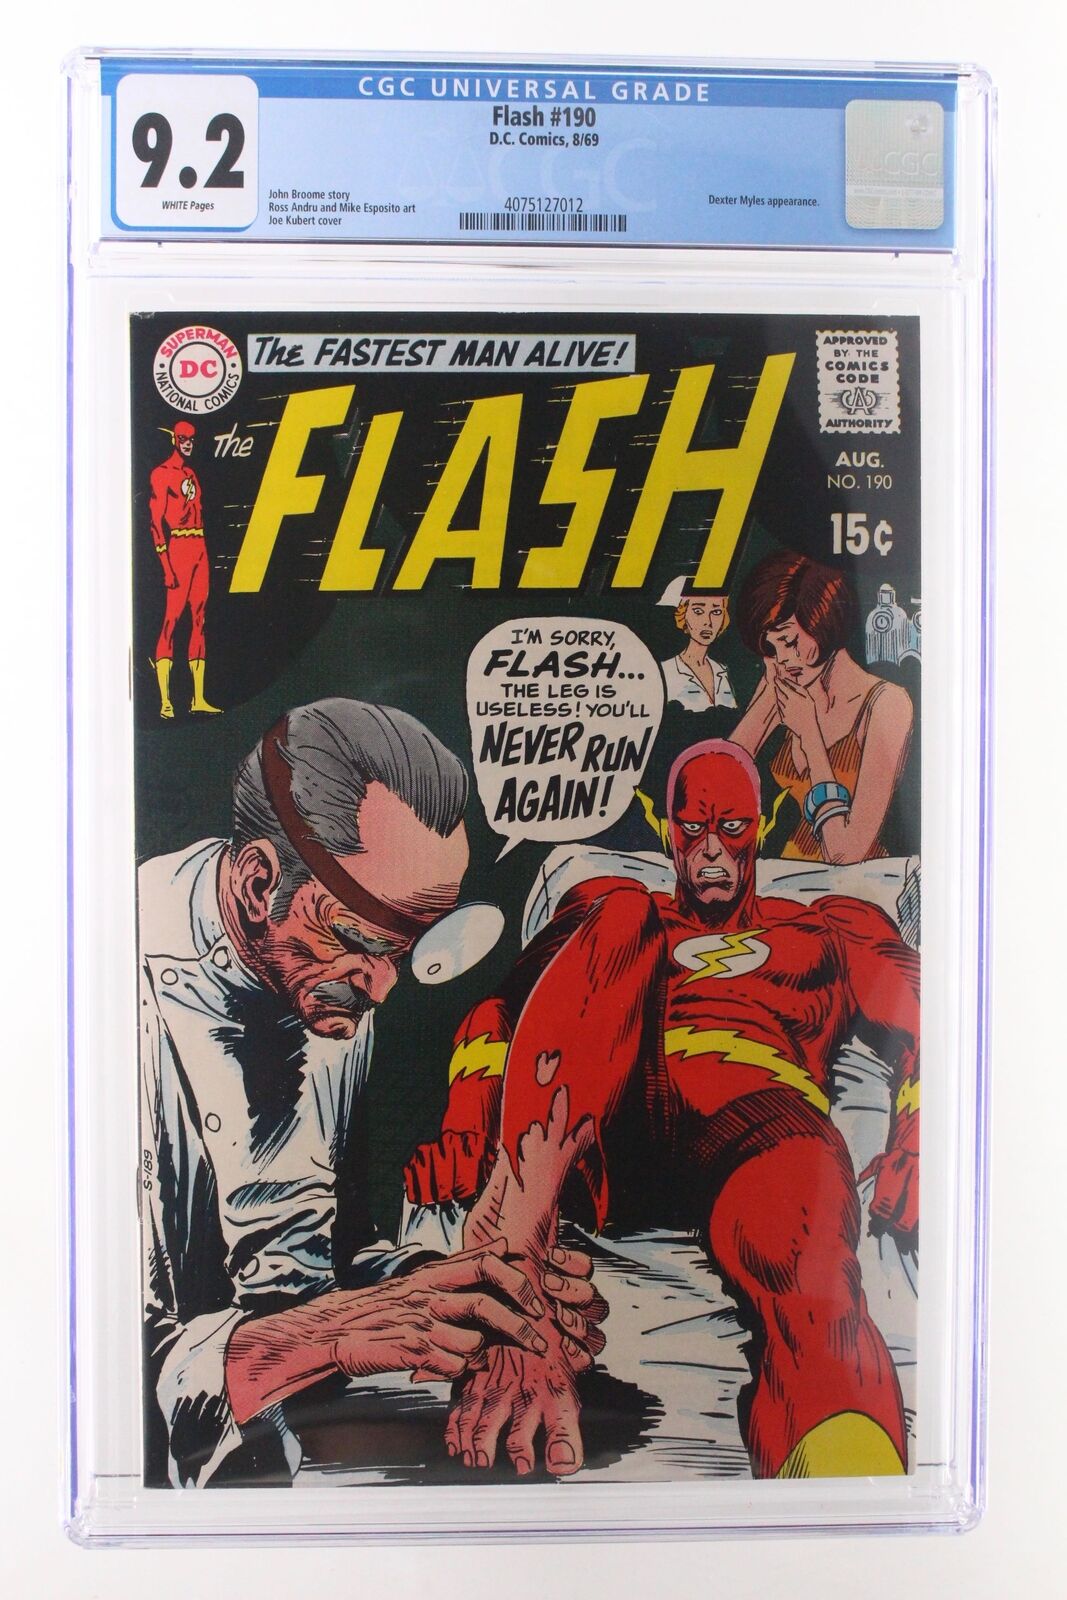 Flash #190 - D.C. Comics 1969 CGC 9.2 Dexter Myles appearance.